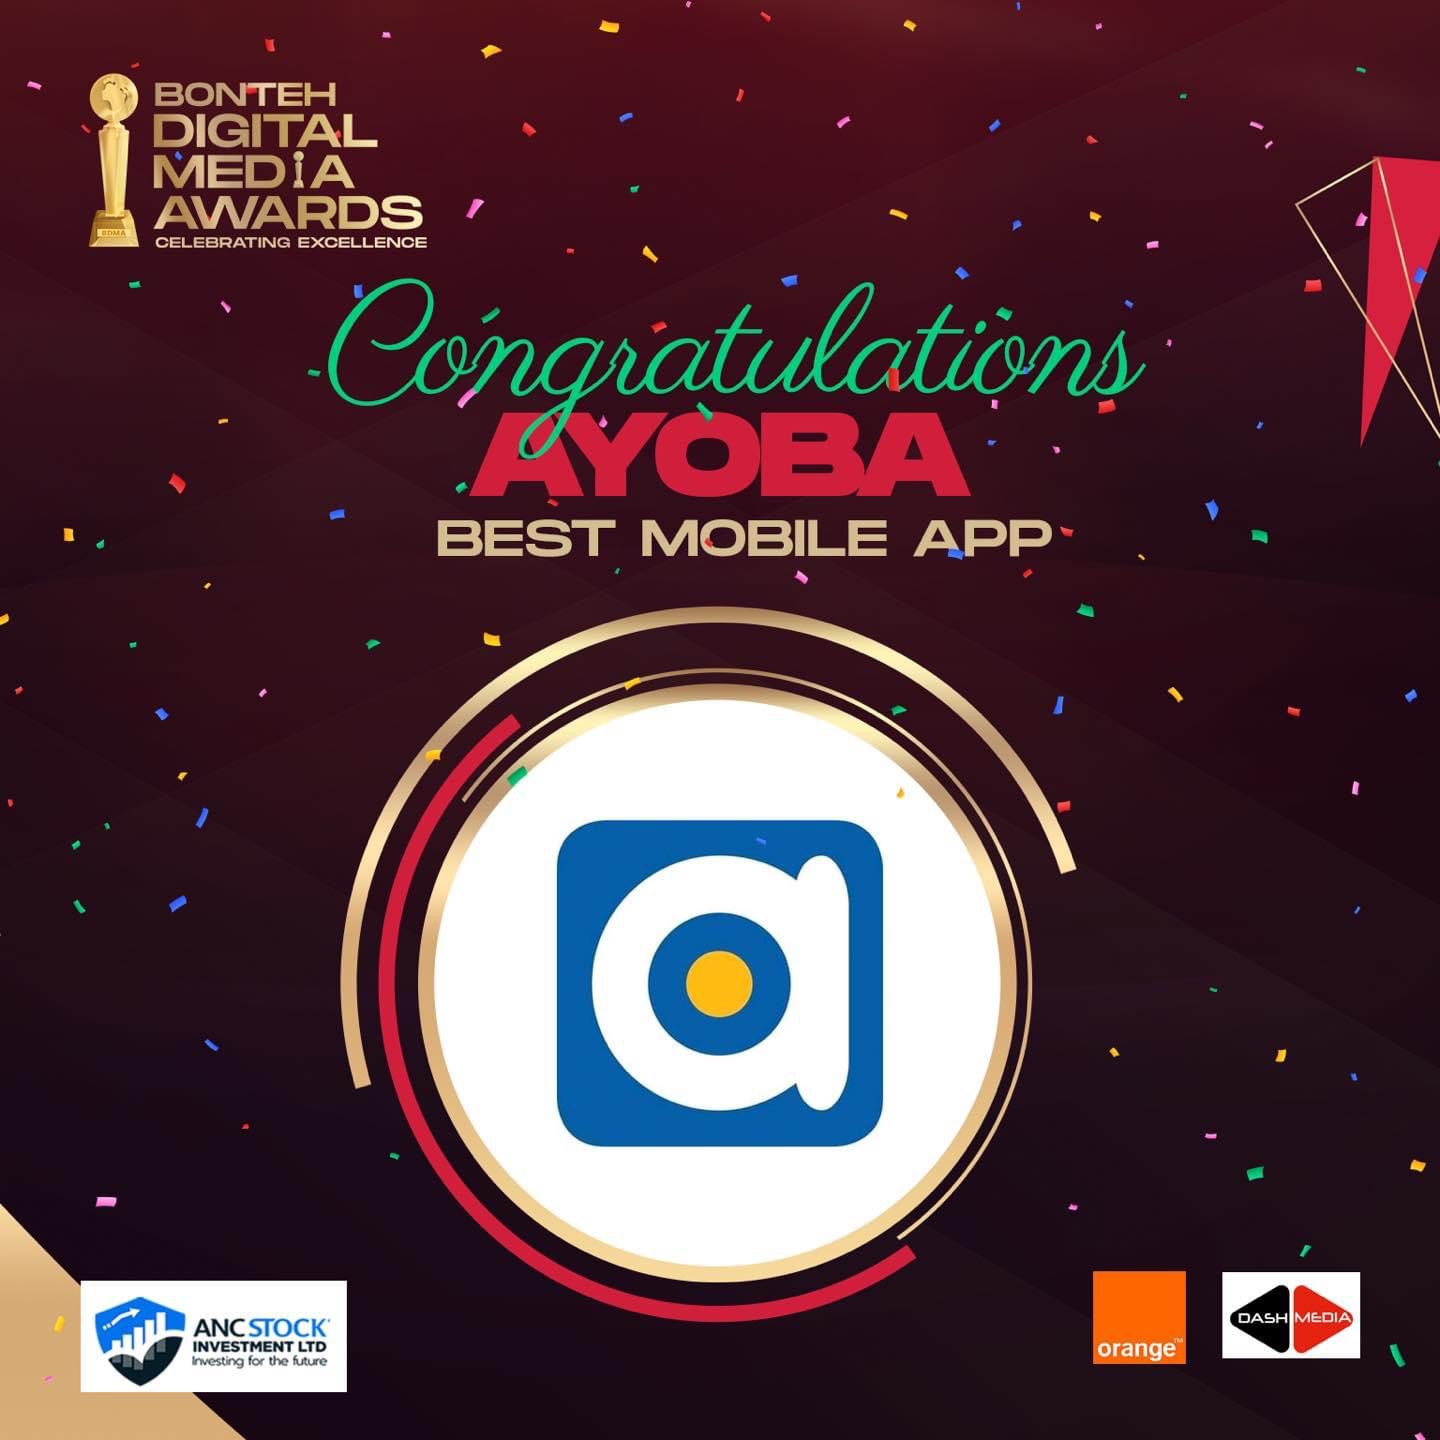 Best Mobile App: Ayoba Instant Messaging